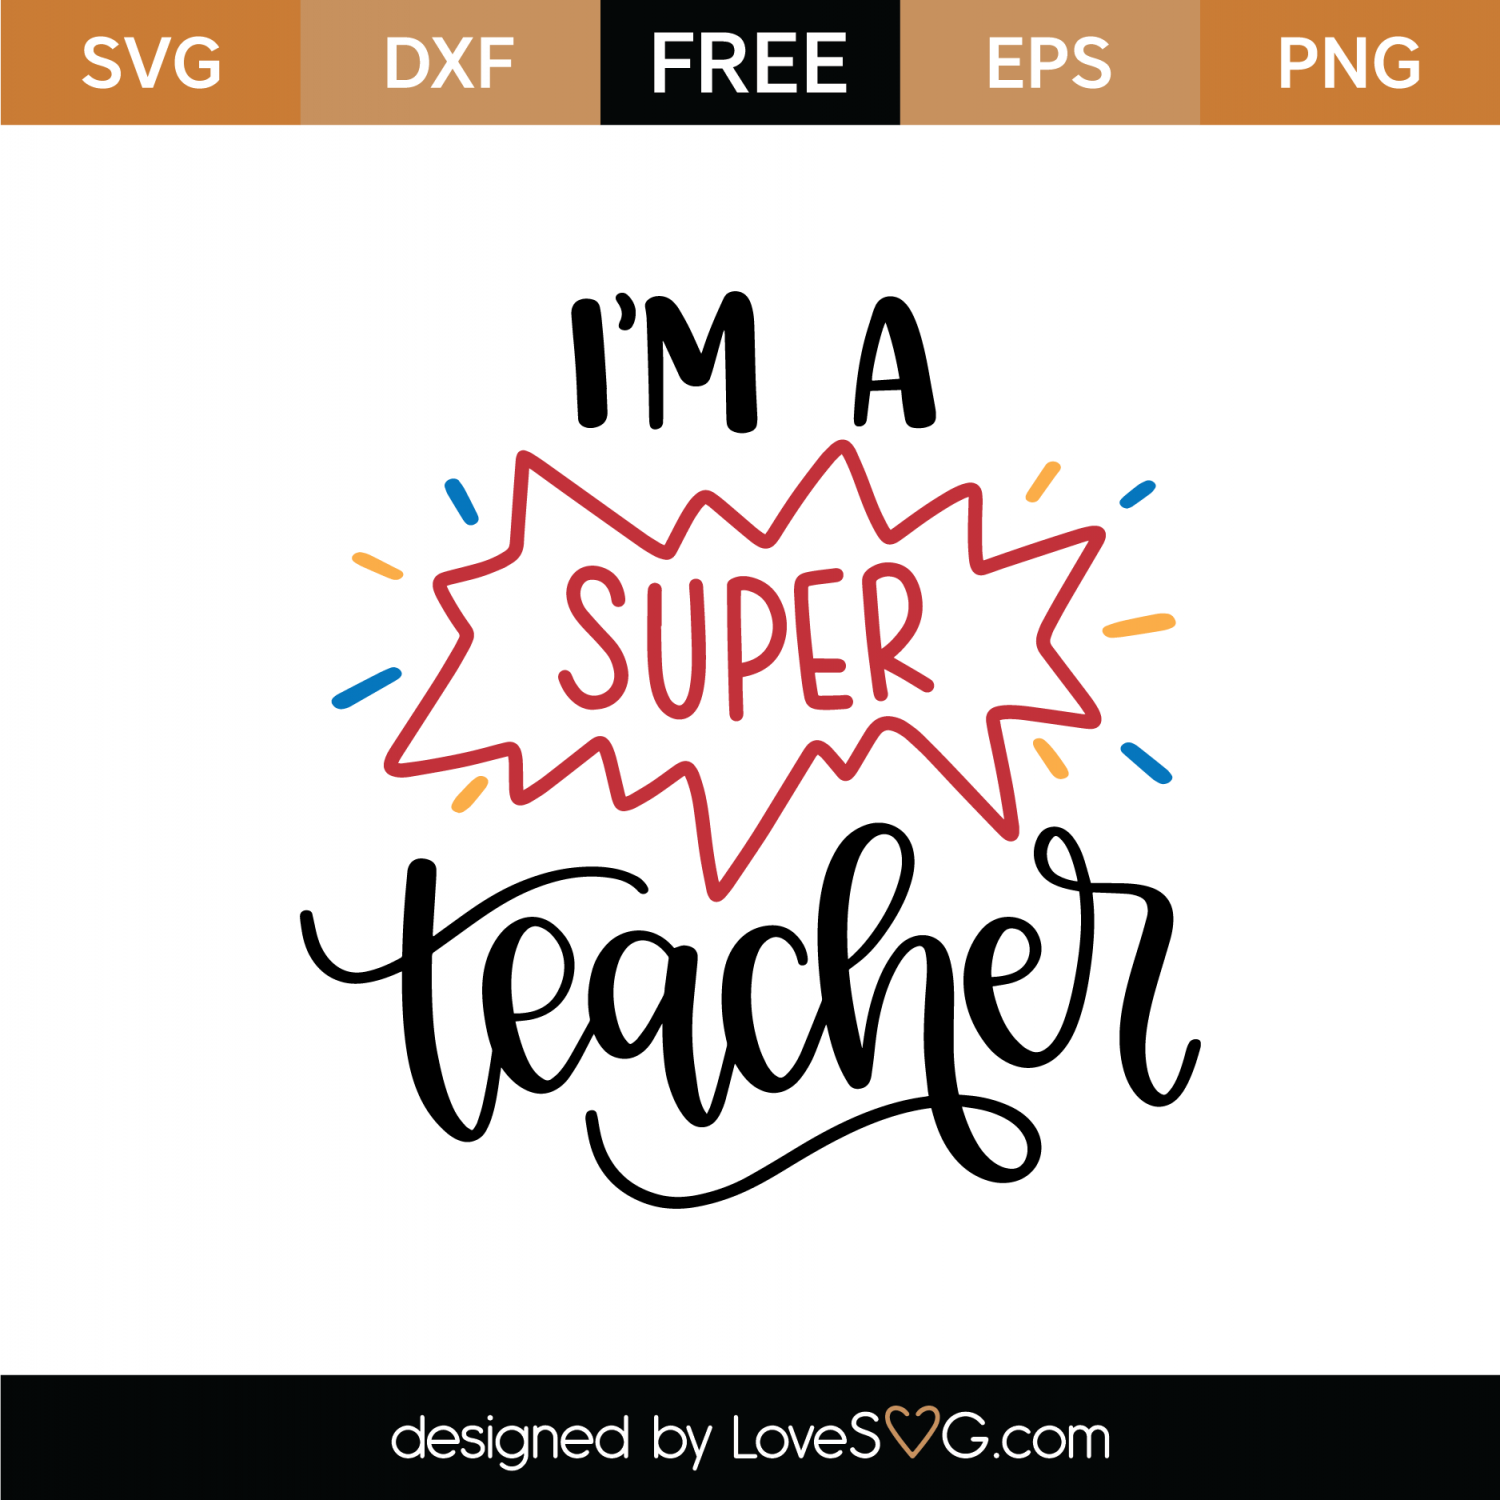 Download Free I'm A Super Teacher SVG Cut File | Lovesvg.com